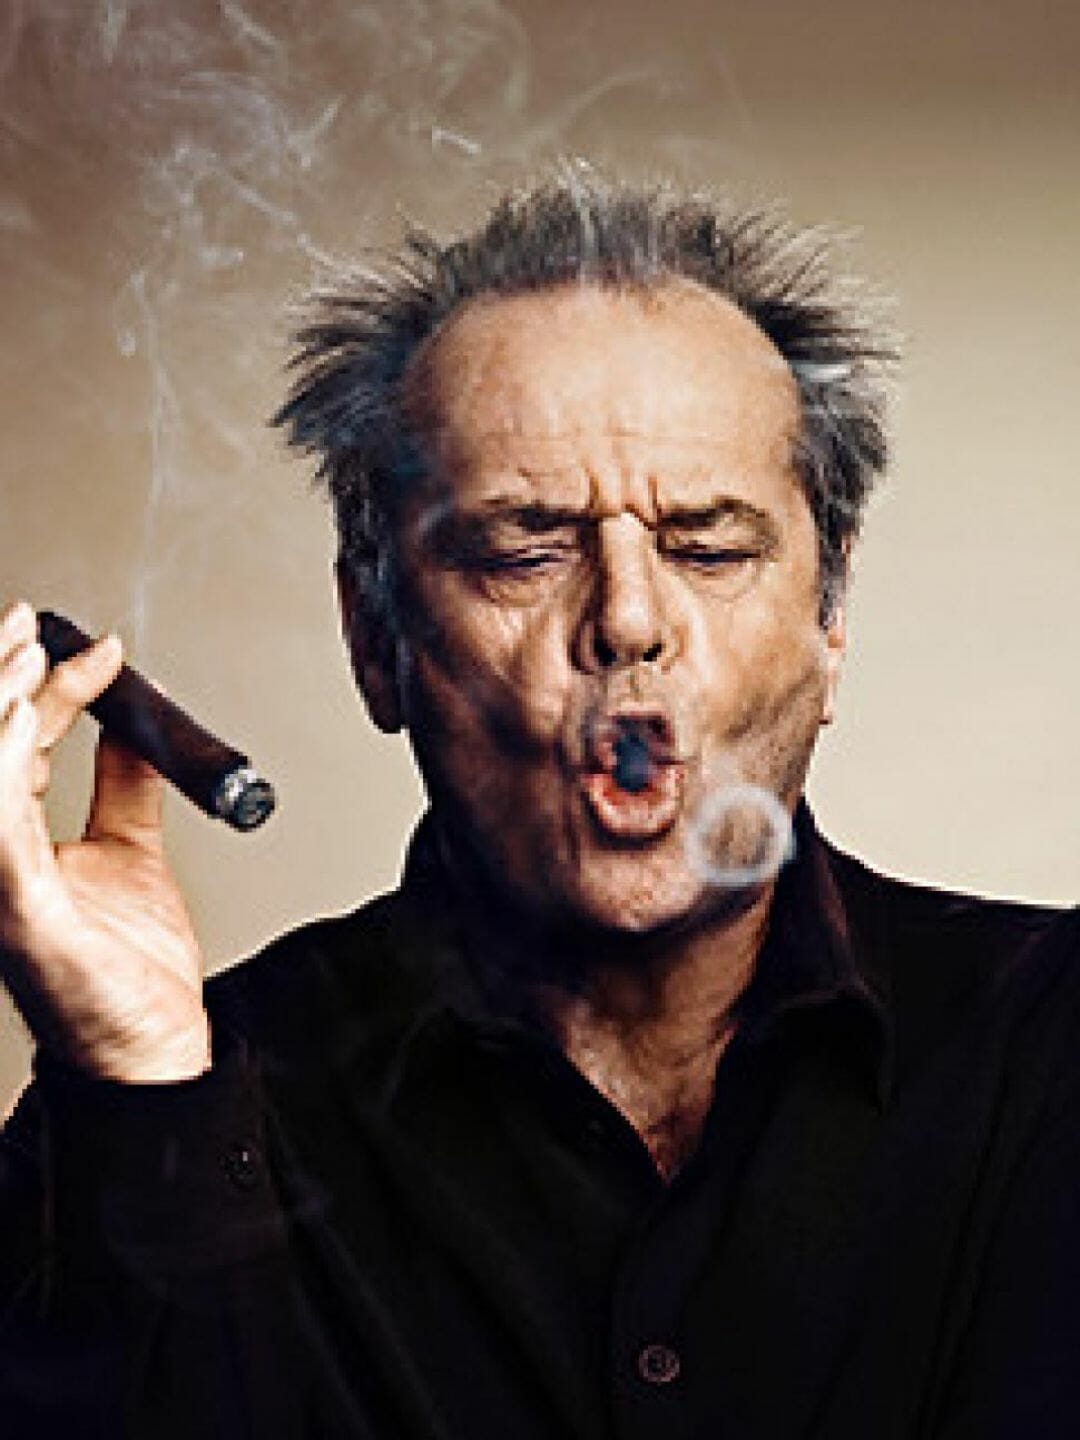 Jack Nicholson Wallpapers